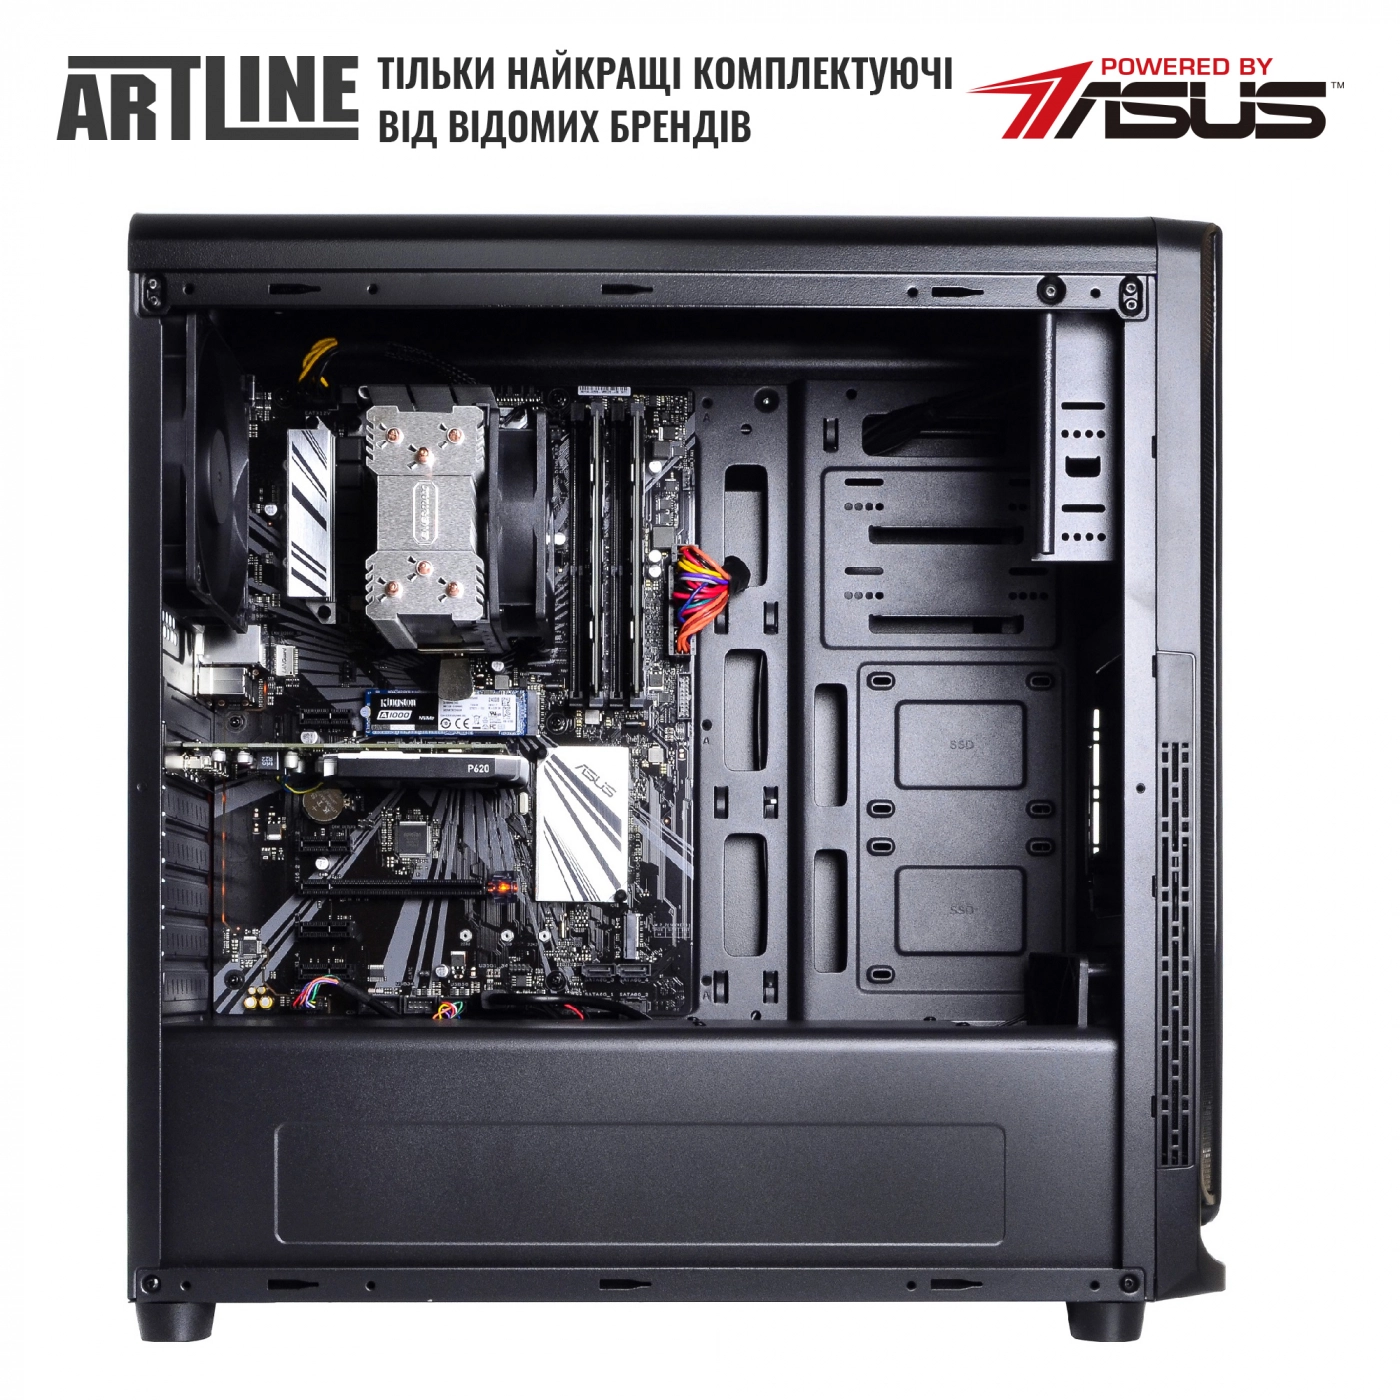 Купити Сервер ARTLINE Business T25v19 - фото 5